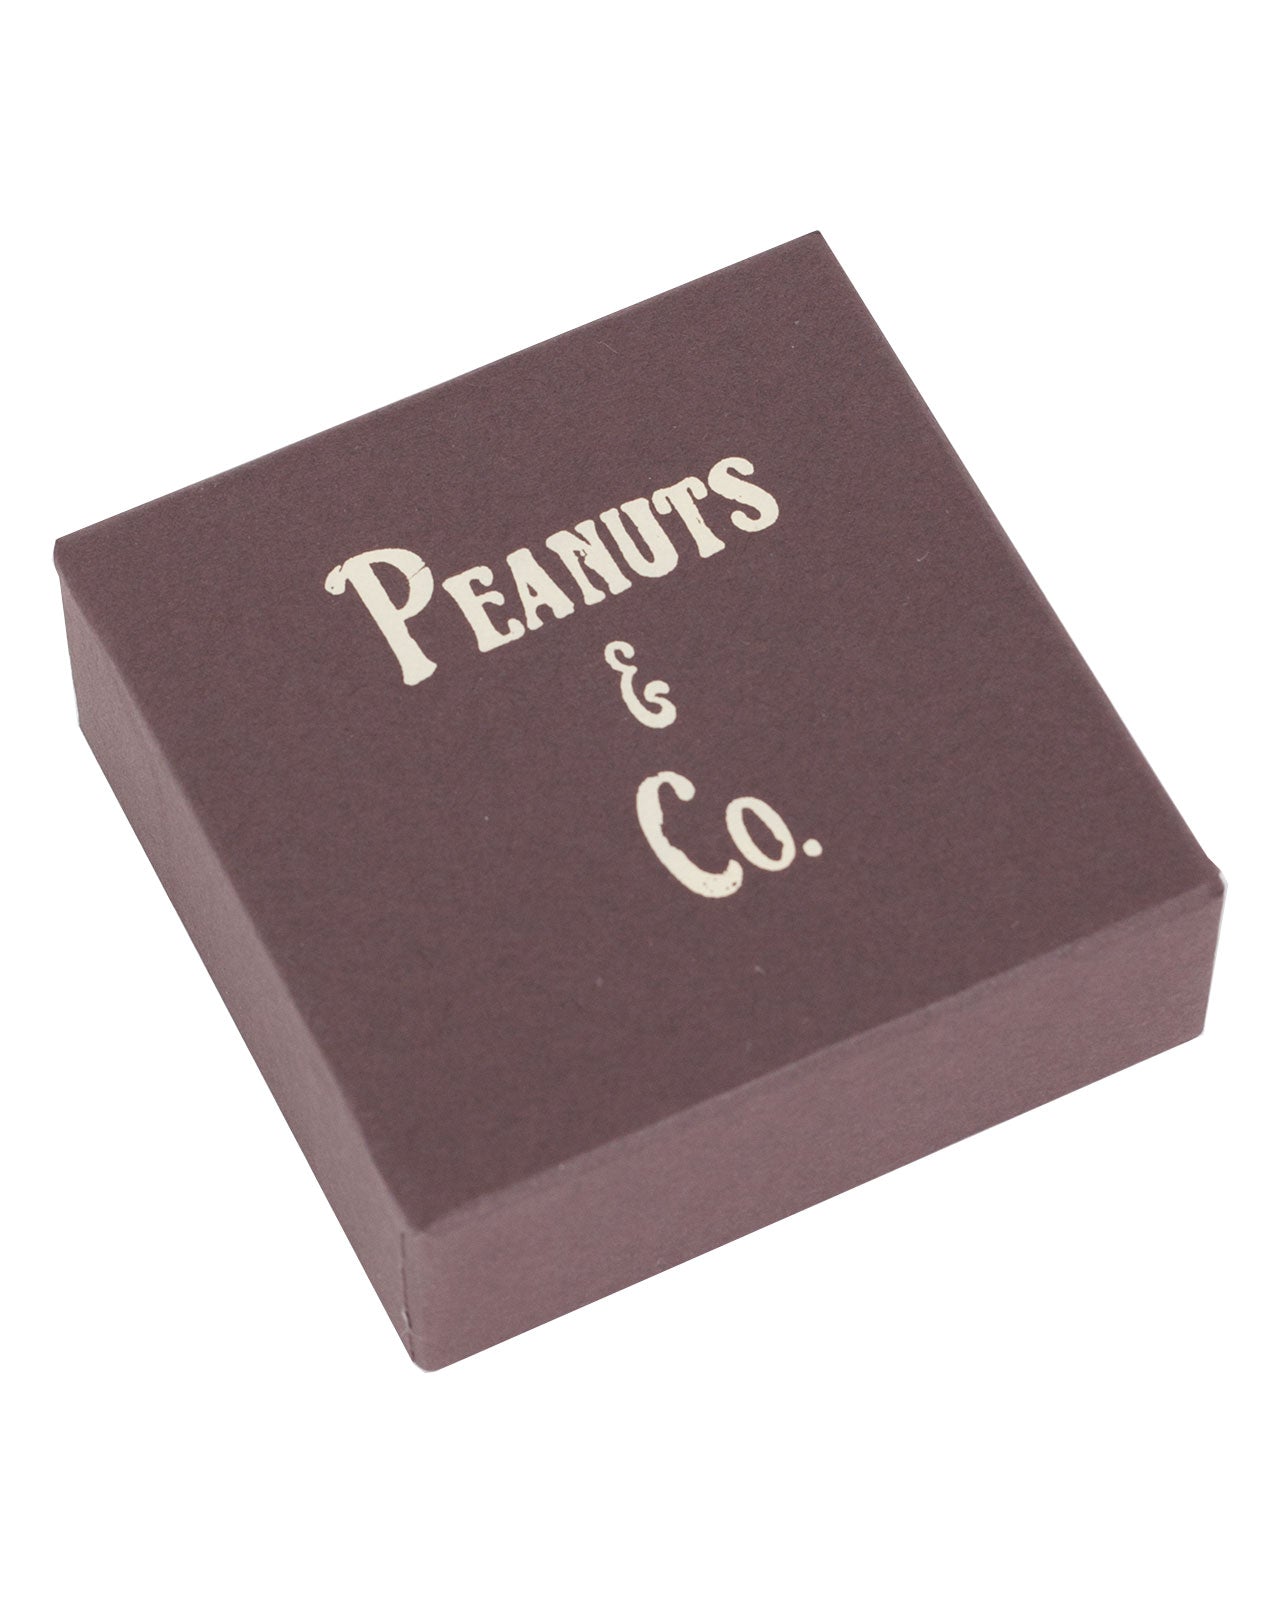 Peanuts & Co Mr Head Key Ring / Pendant, Brass